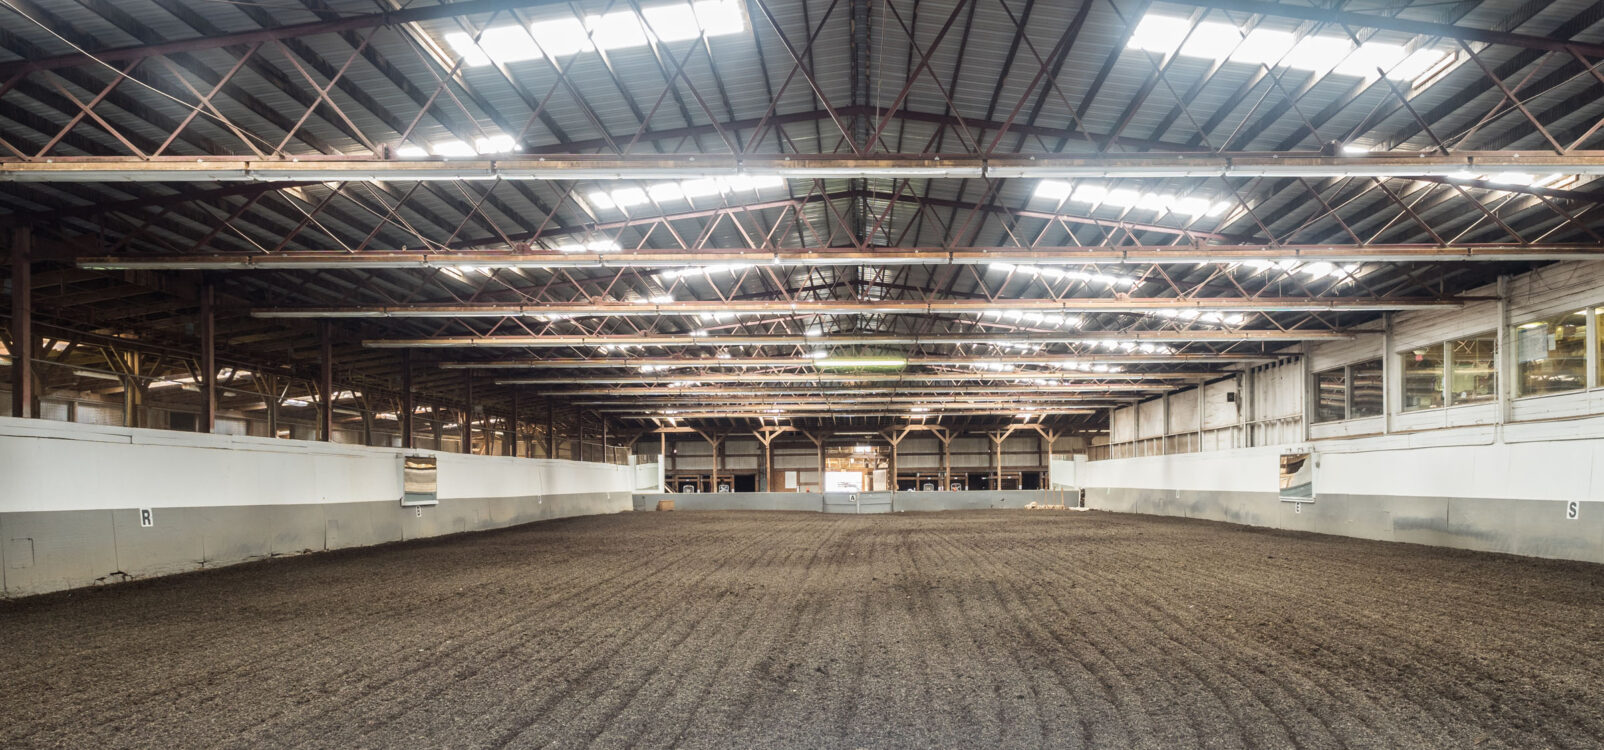 indoor arena Potomac Horse Center Special Park